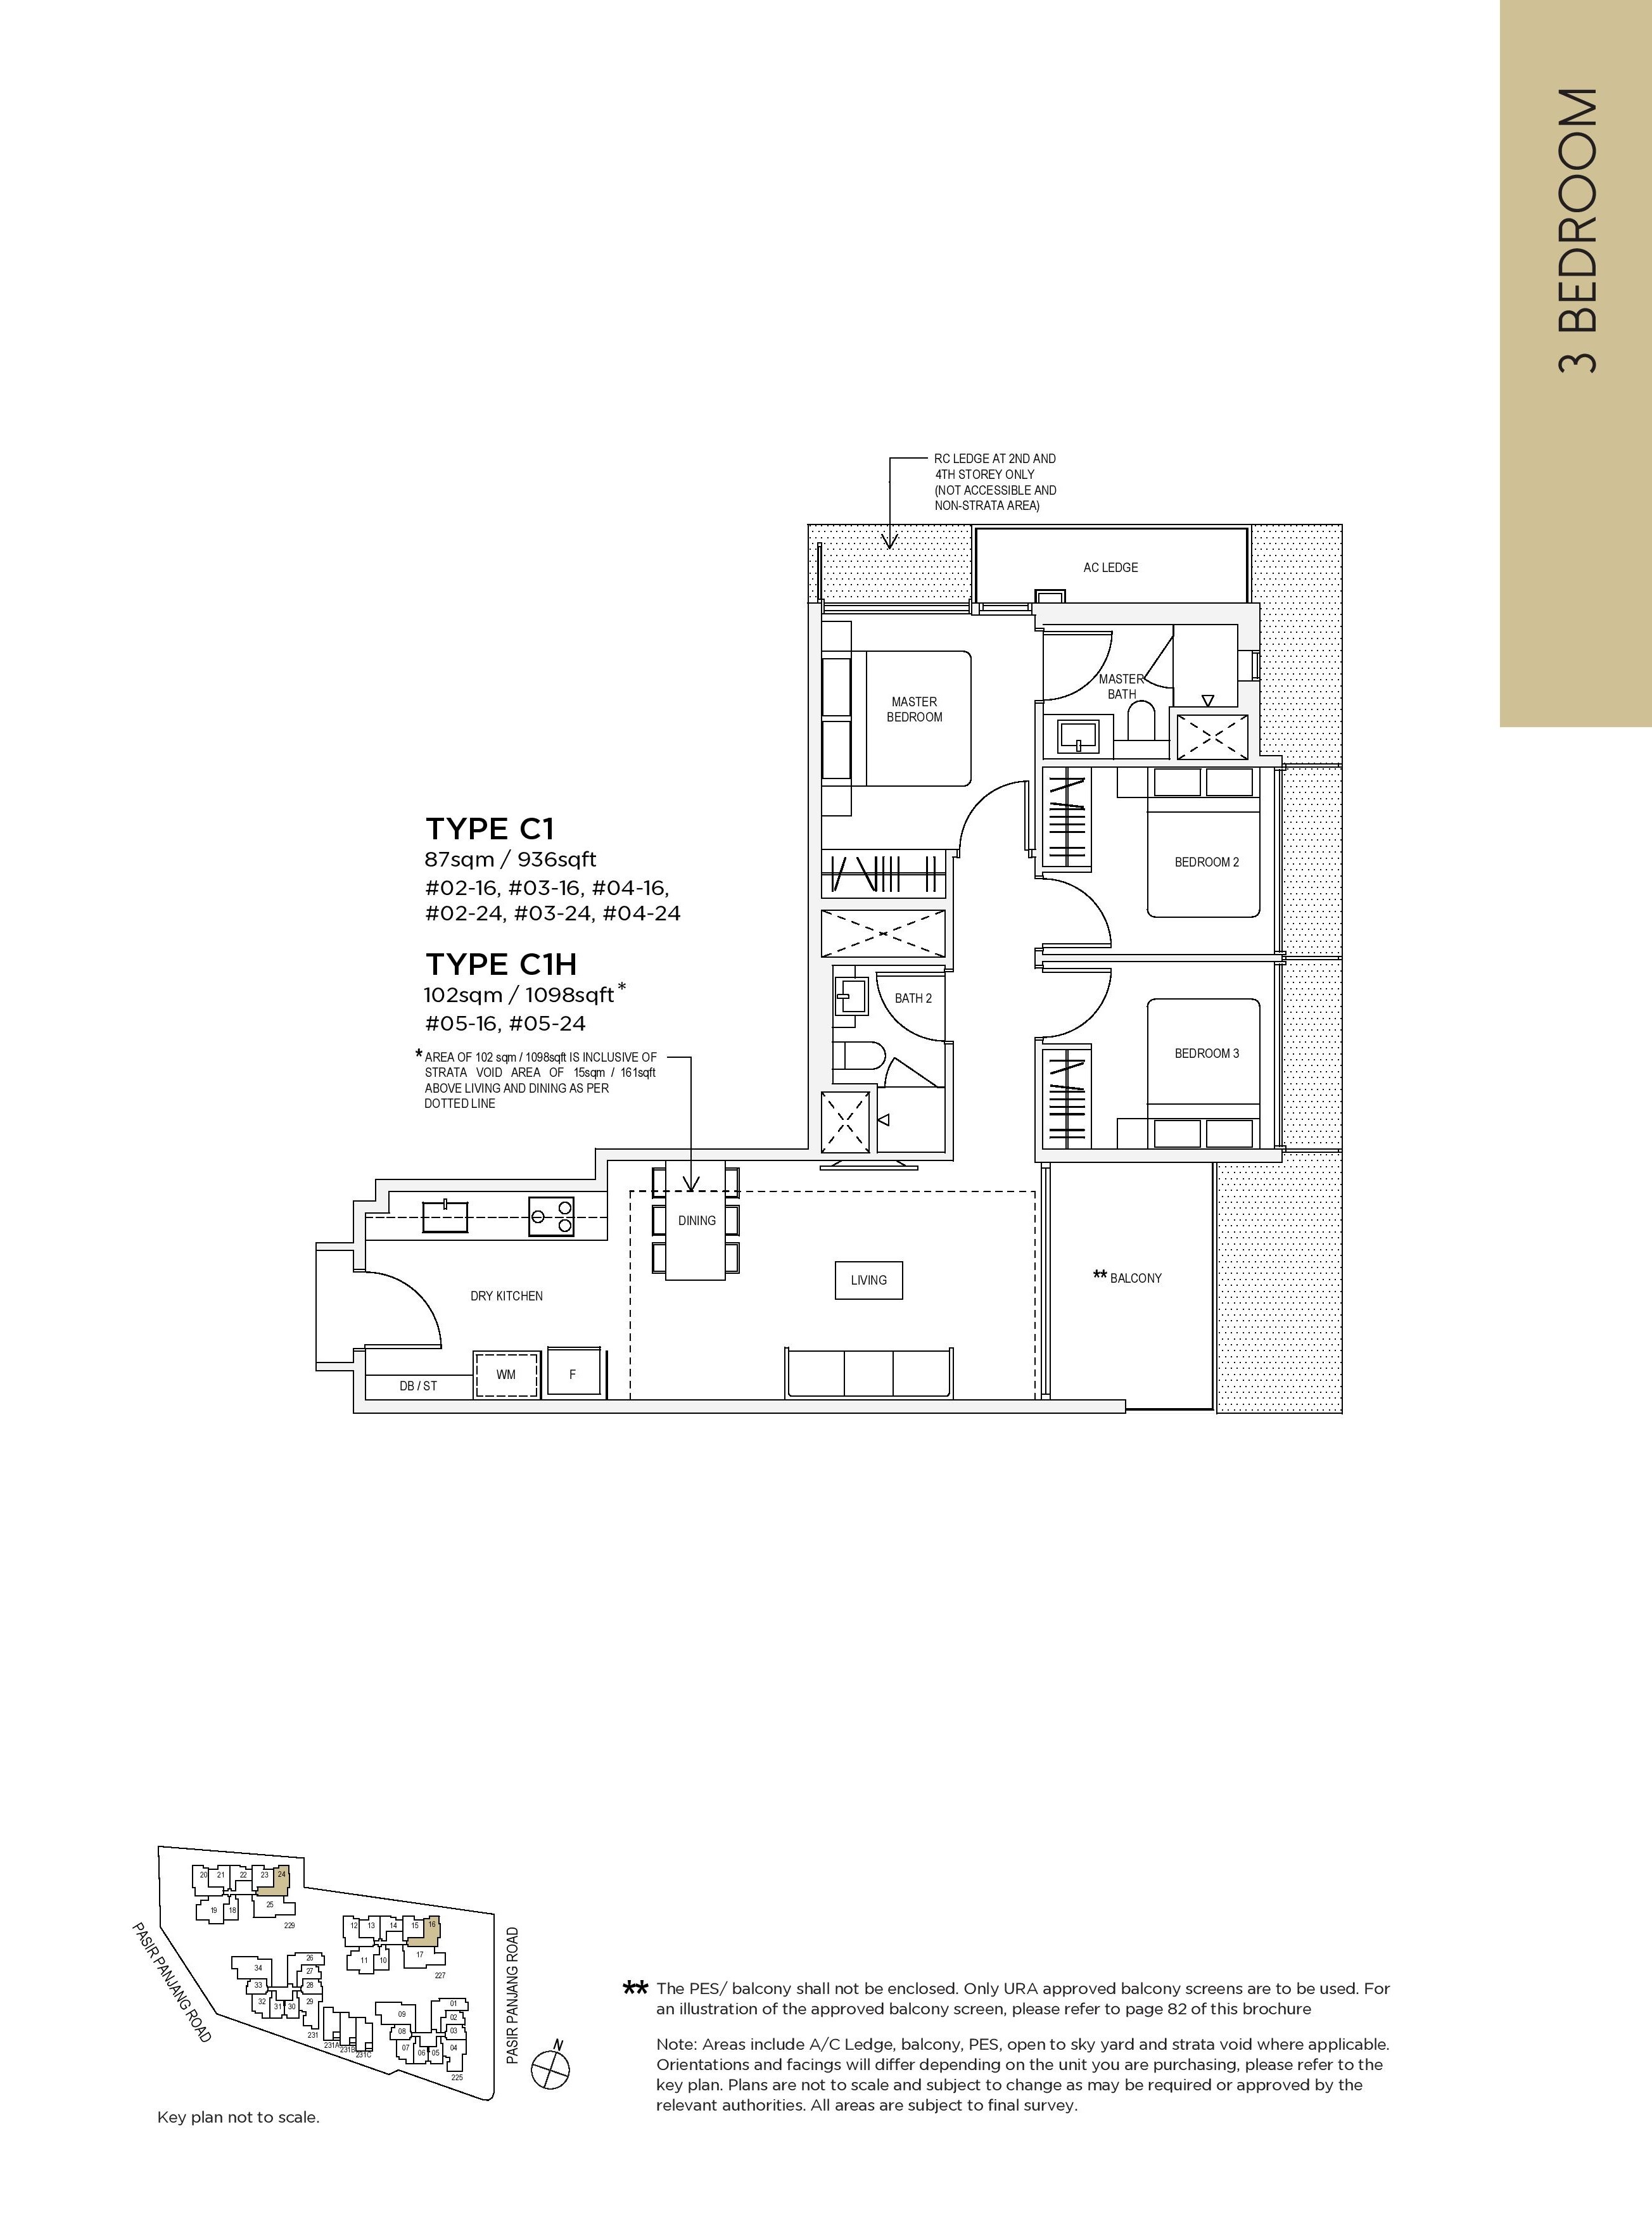 The Verandah Residences 3 Bedroom Floor Plans Type C1, C1H